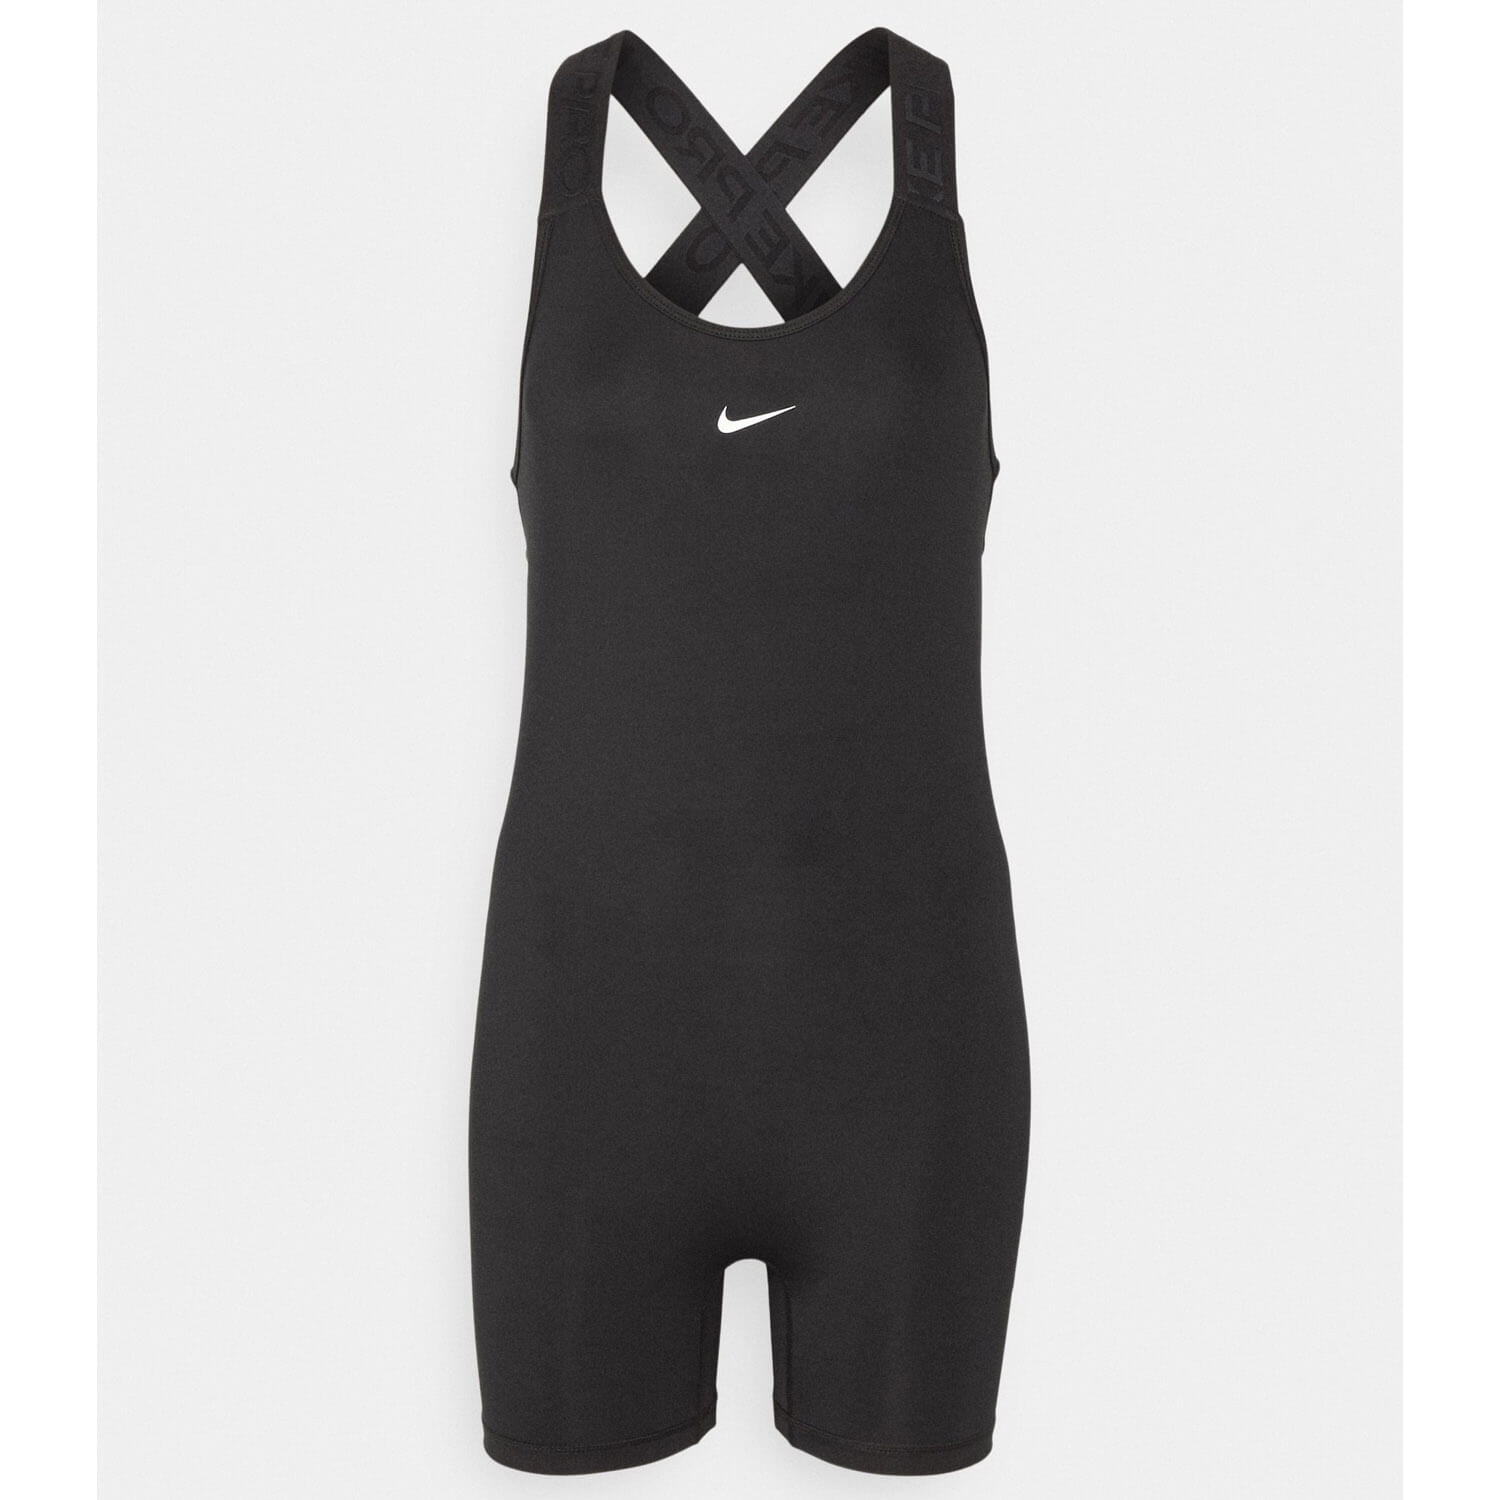 Спортивный боди-костюм Nike, черный спортивный костюм nike черный